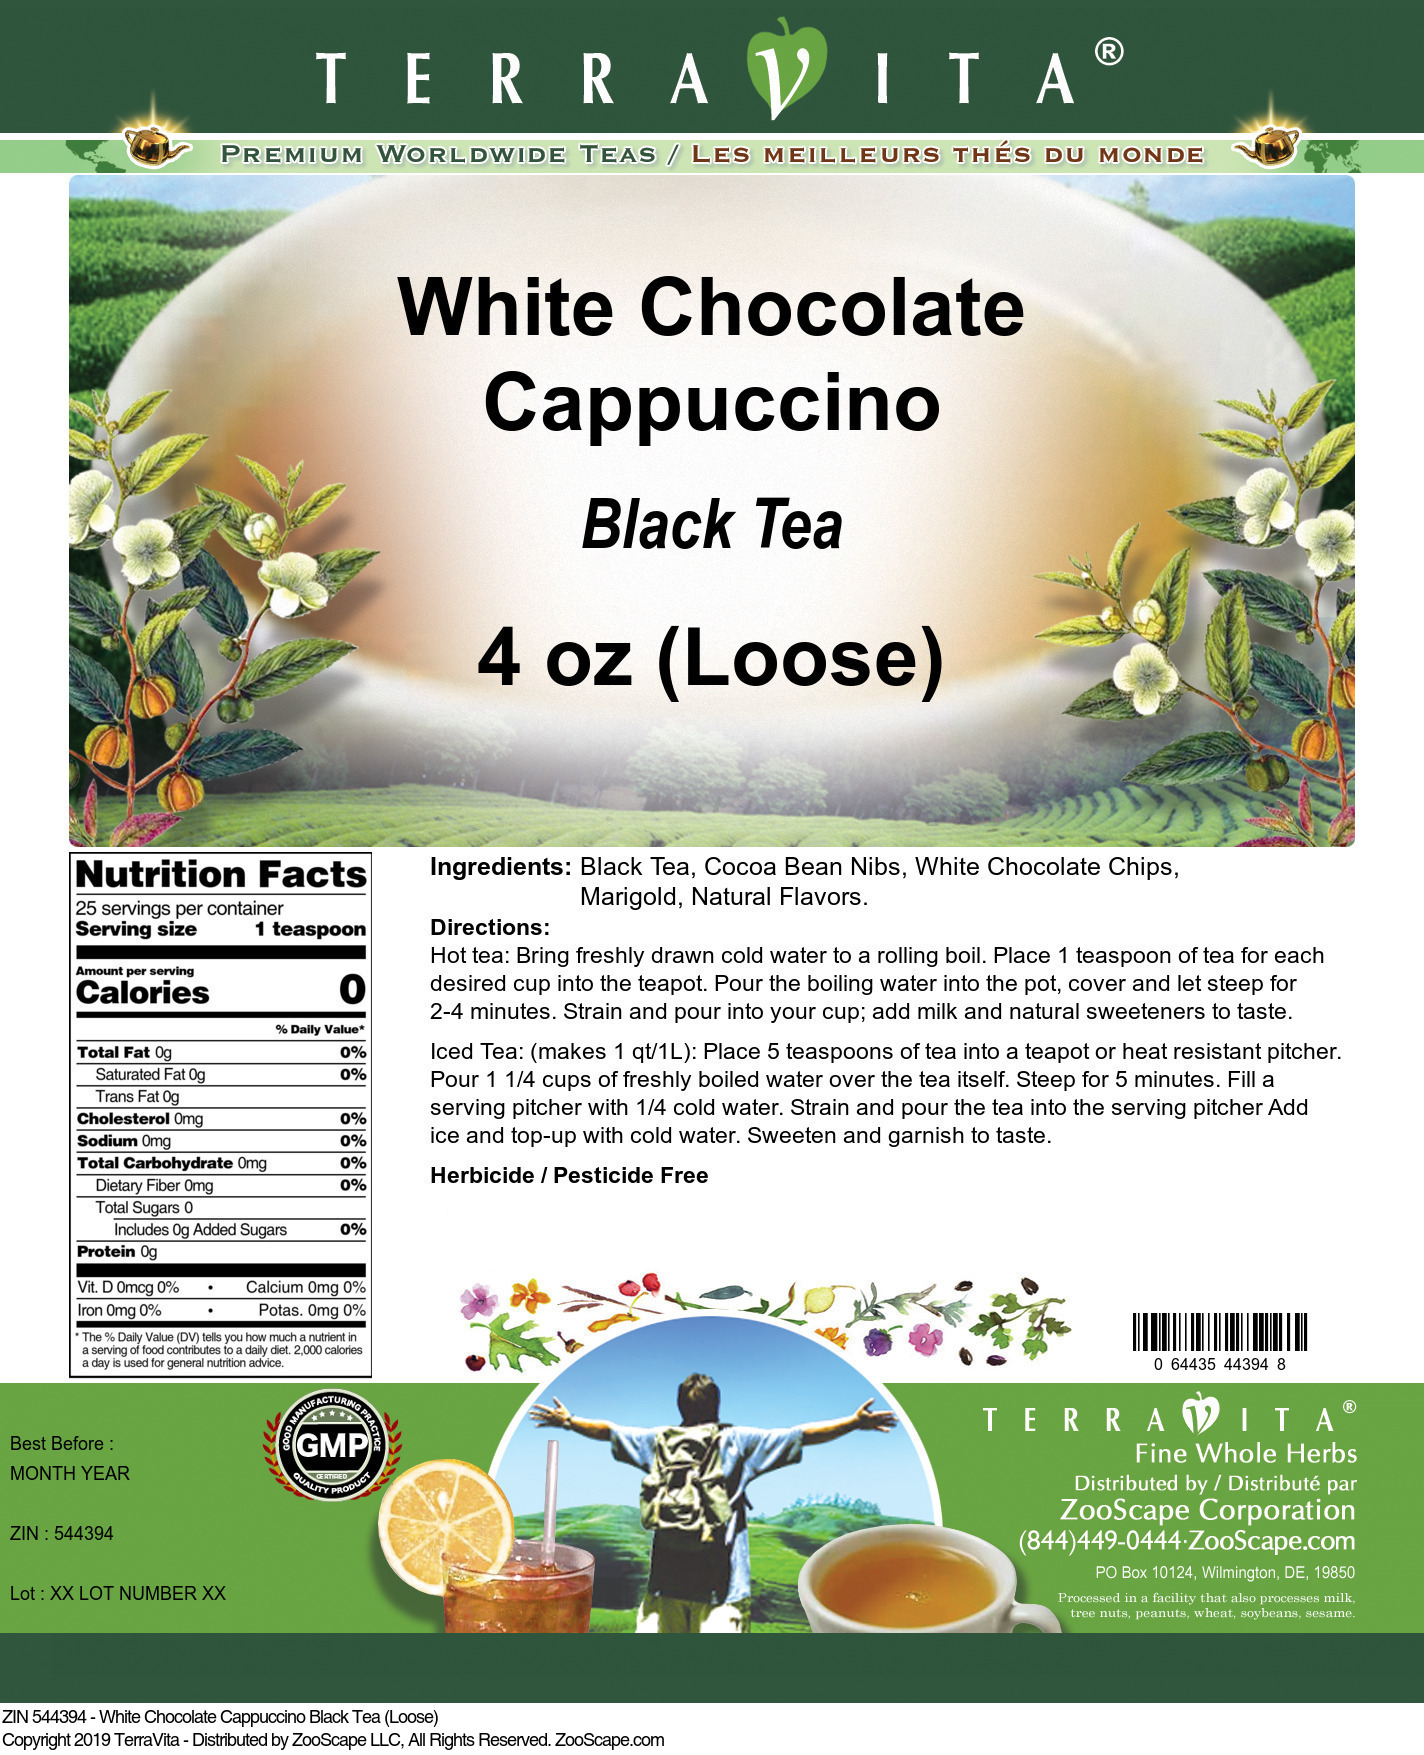 White Chocolate Cappuccino Black Tea (Loose) - Label